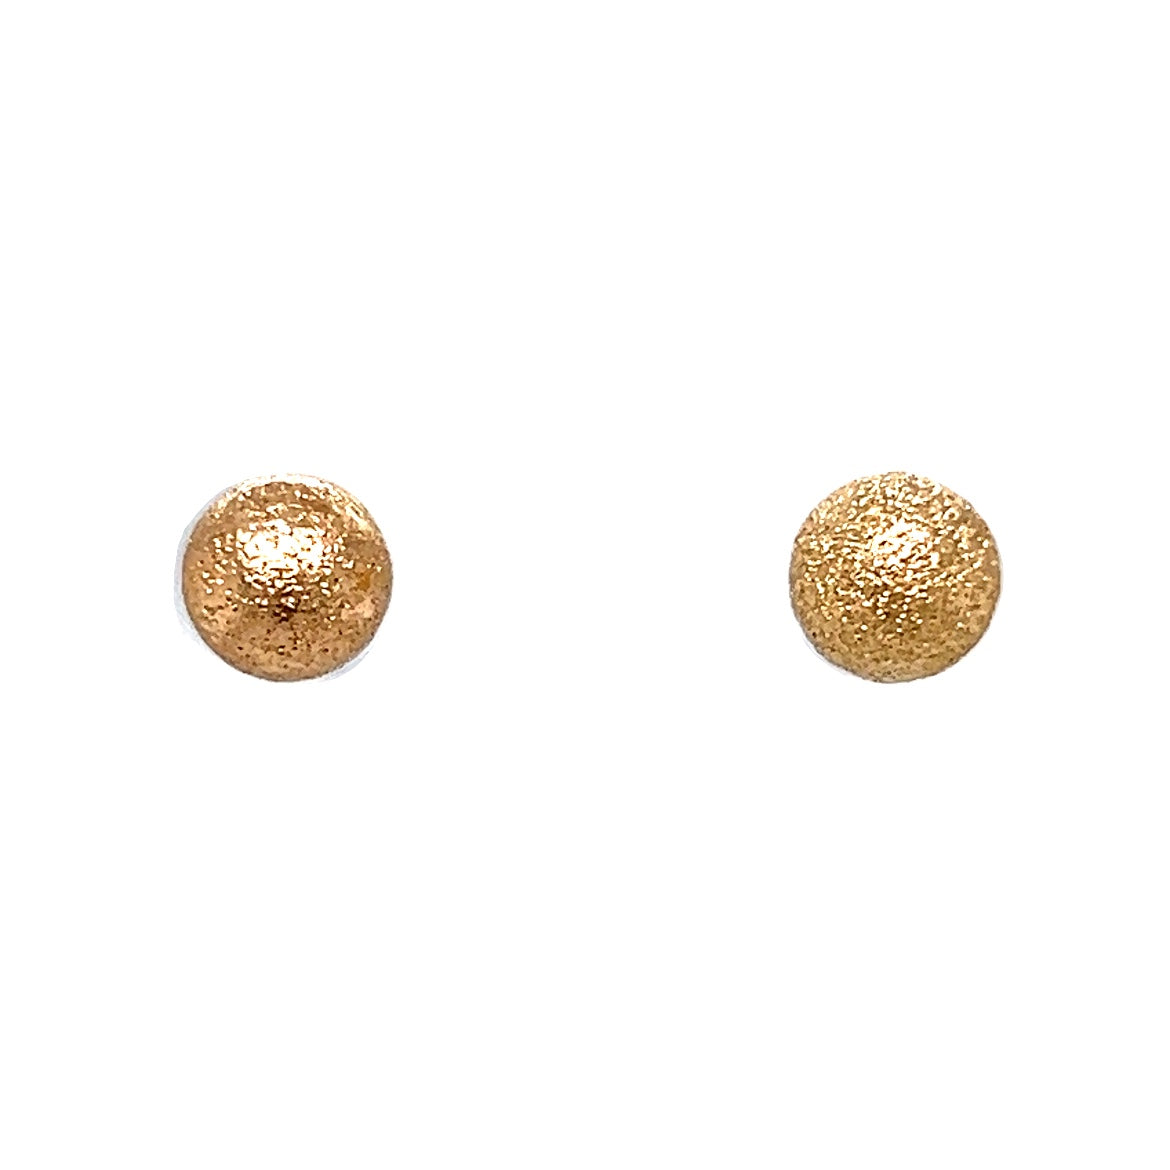 Buy Long Drop Ball Ear Jacket Gold Earrings Round Stud Earring Studs Long  Dangly Earring Sterling Silver Charm Earring Cool Gift Online in India -  Etsy